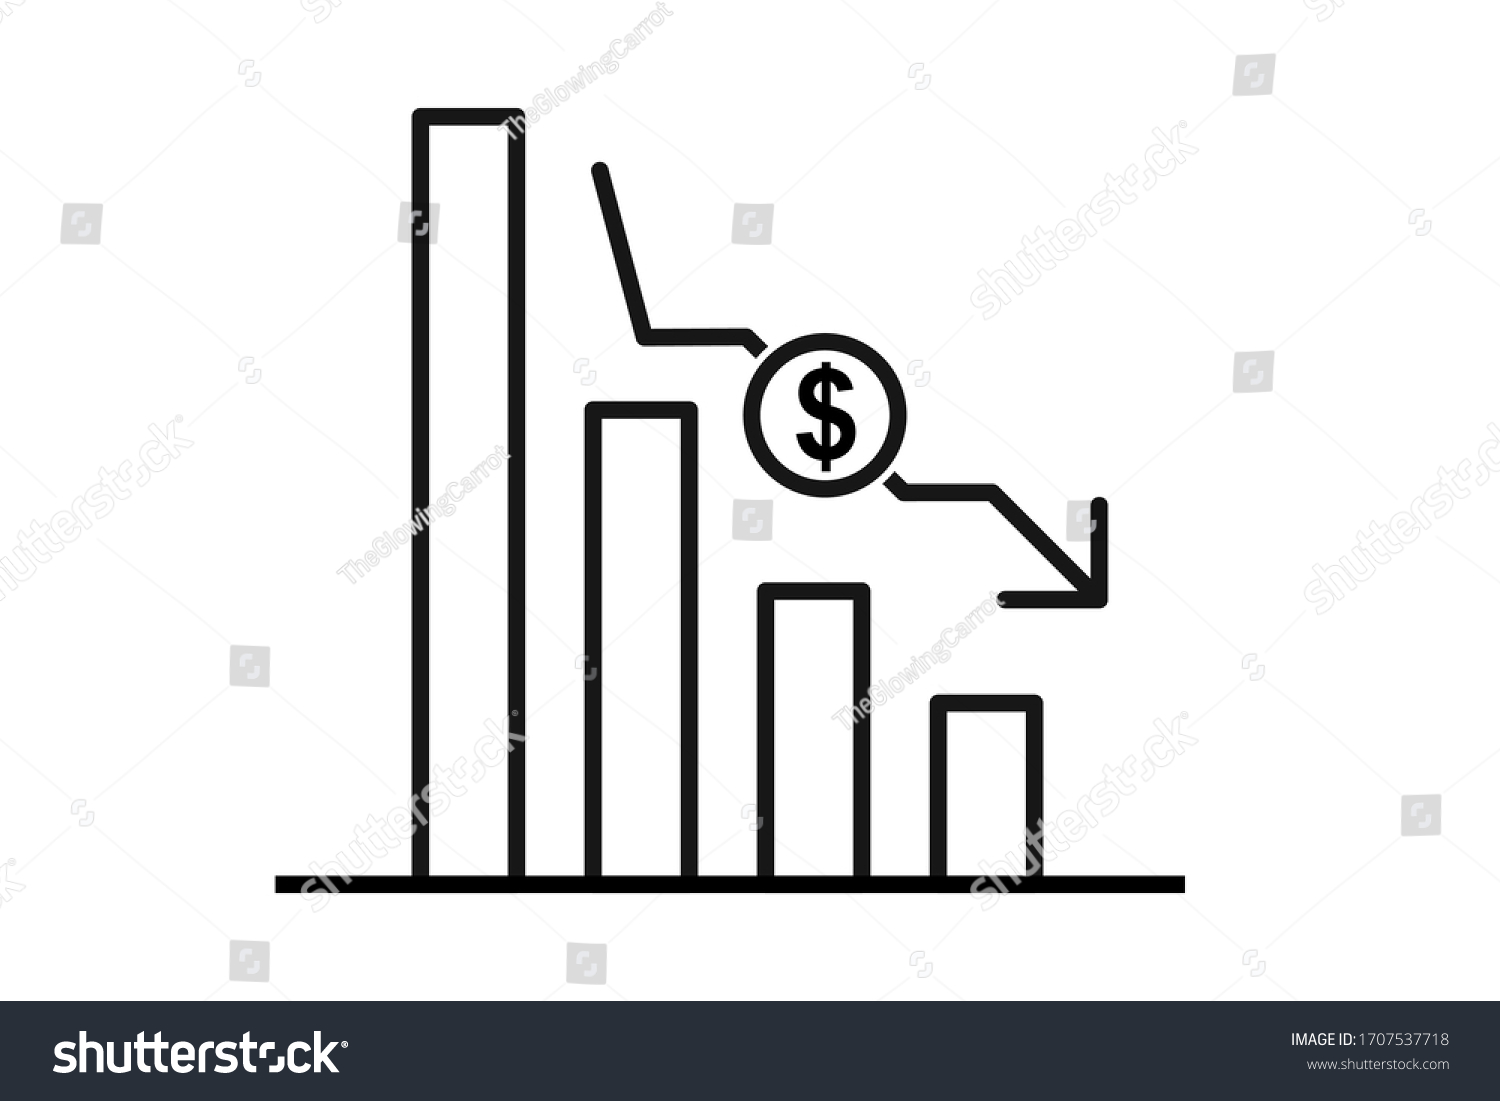 SVG of Icon representing Dollar currency depreciation. svg